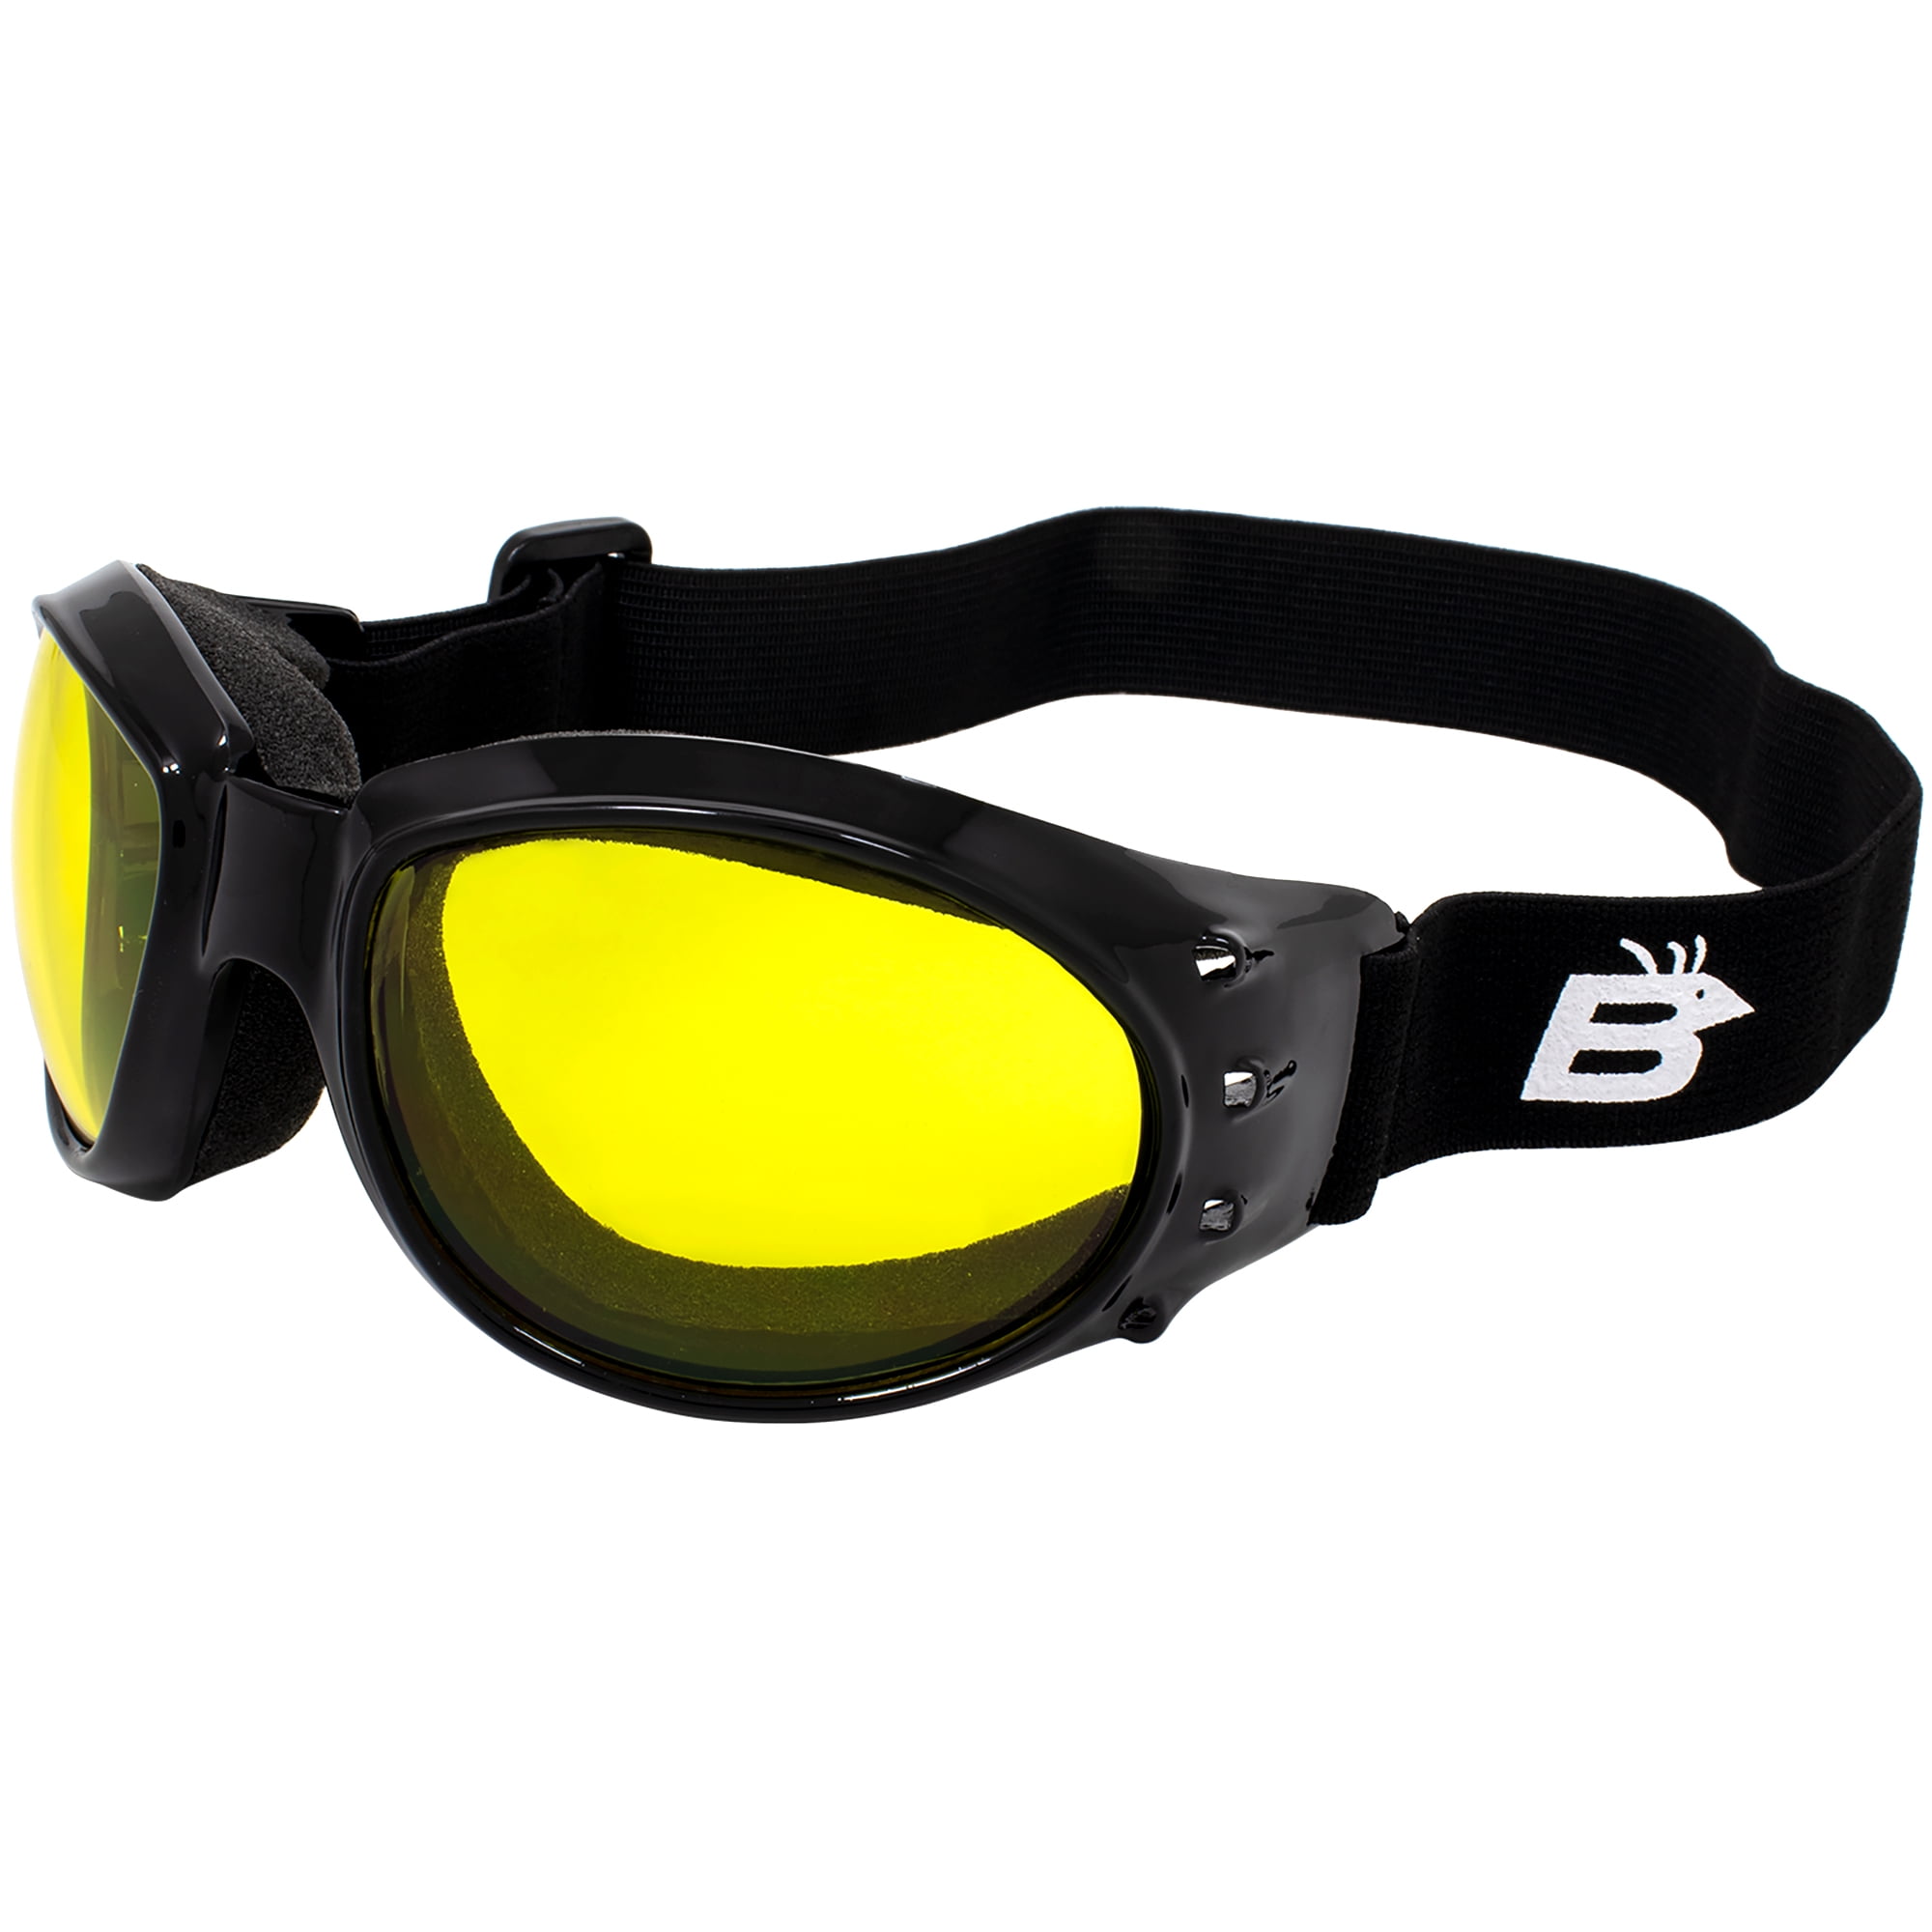 Birdz Eyewear Bald Eagle Padded Motorcycle Riding Safety Goggles Black  Frame w/ Yellow Lens Supreme for Dirt Bikes ATV & Skydiving 